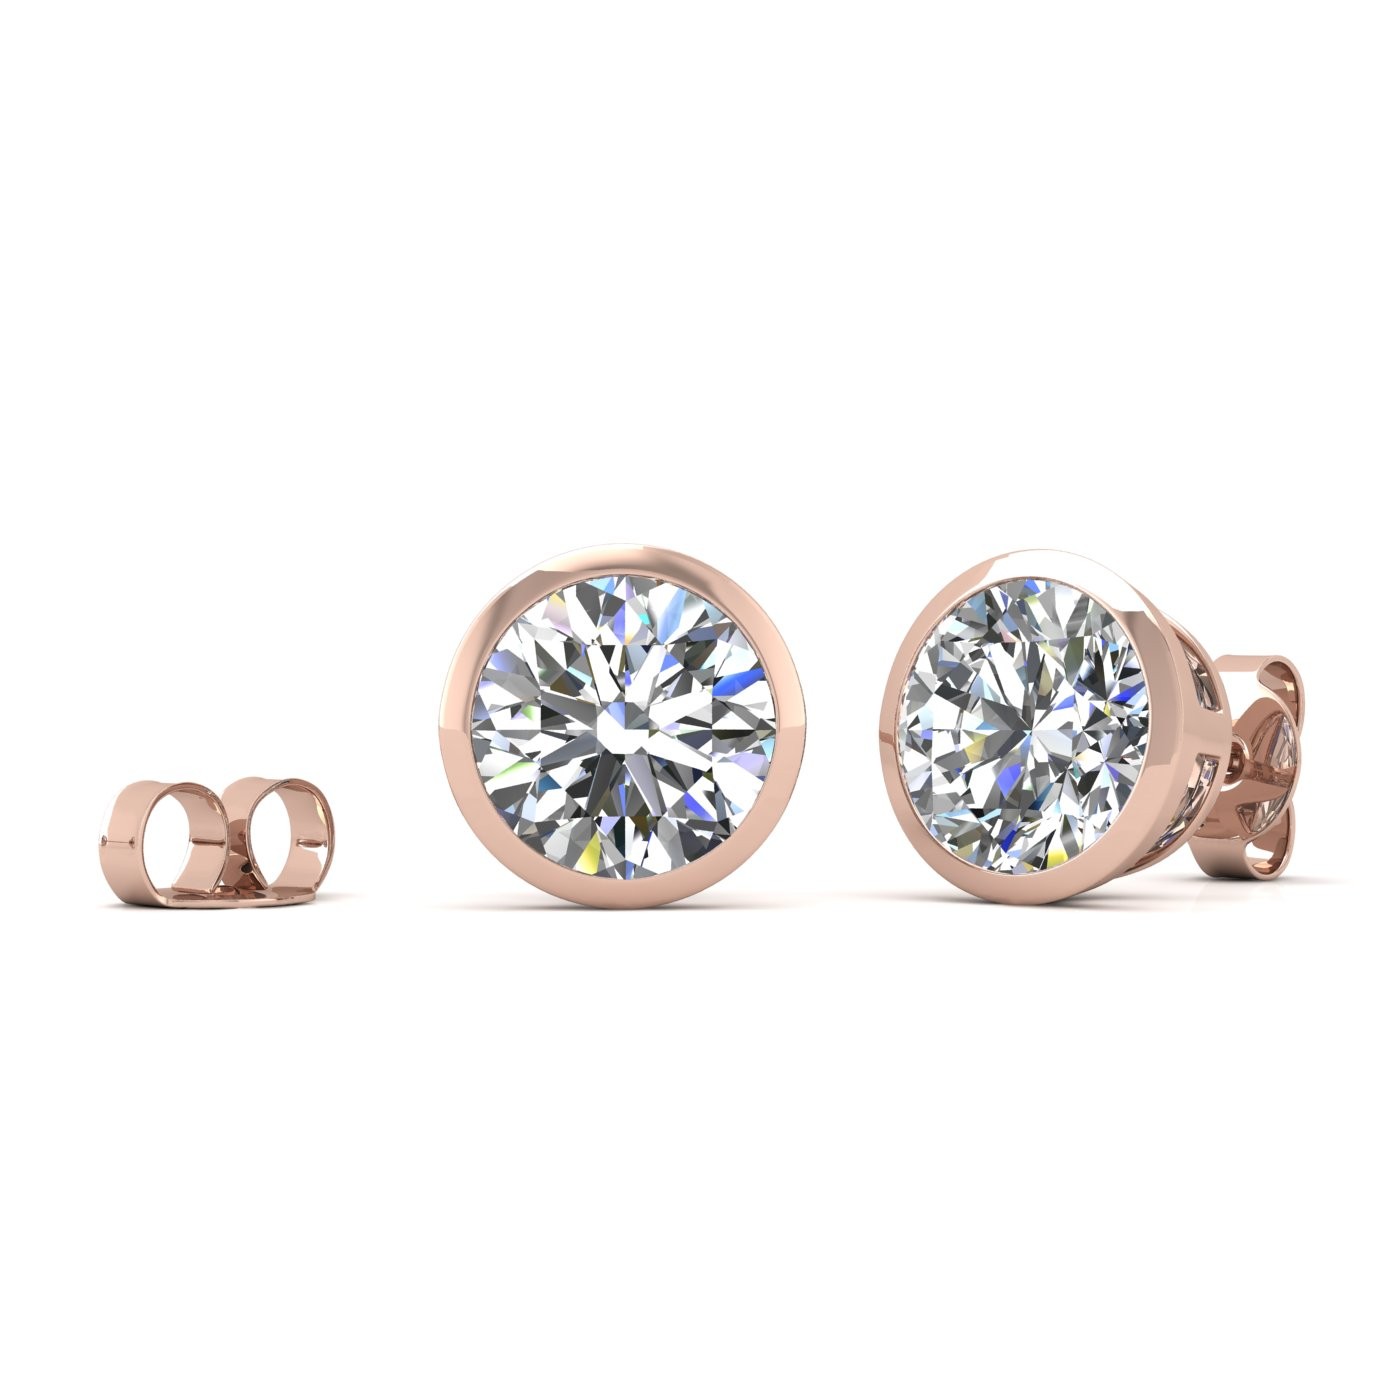 18k rose gold 2.5 ct each (5,0 tcw) round brilliant cut diamond bezel set earring studs Photos & images